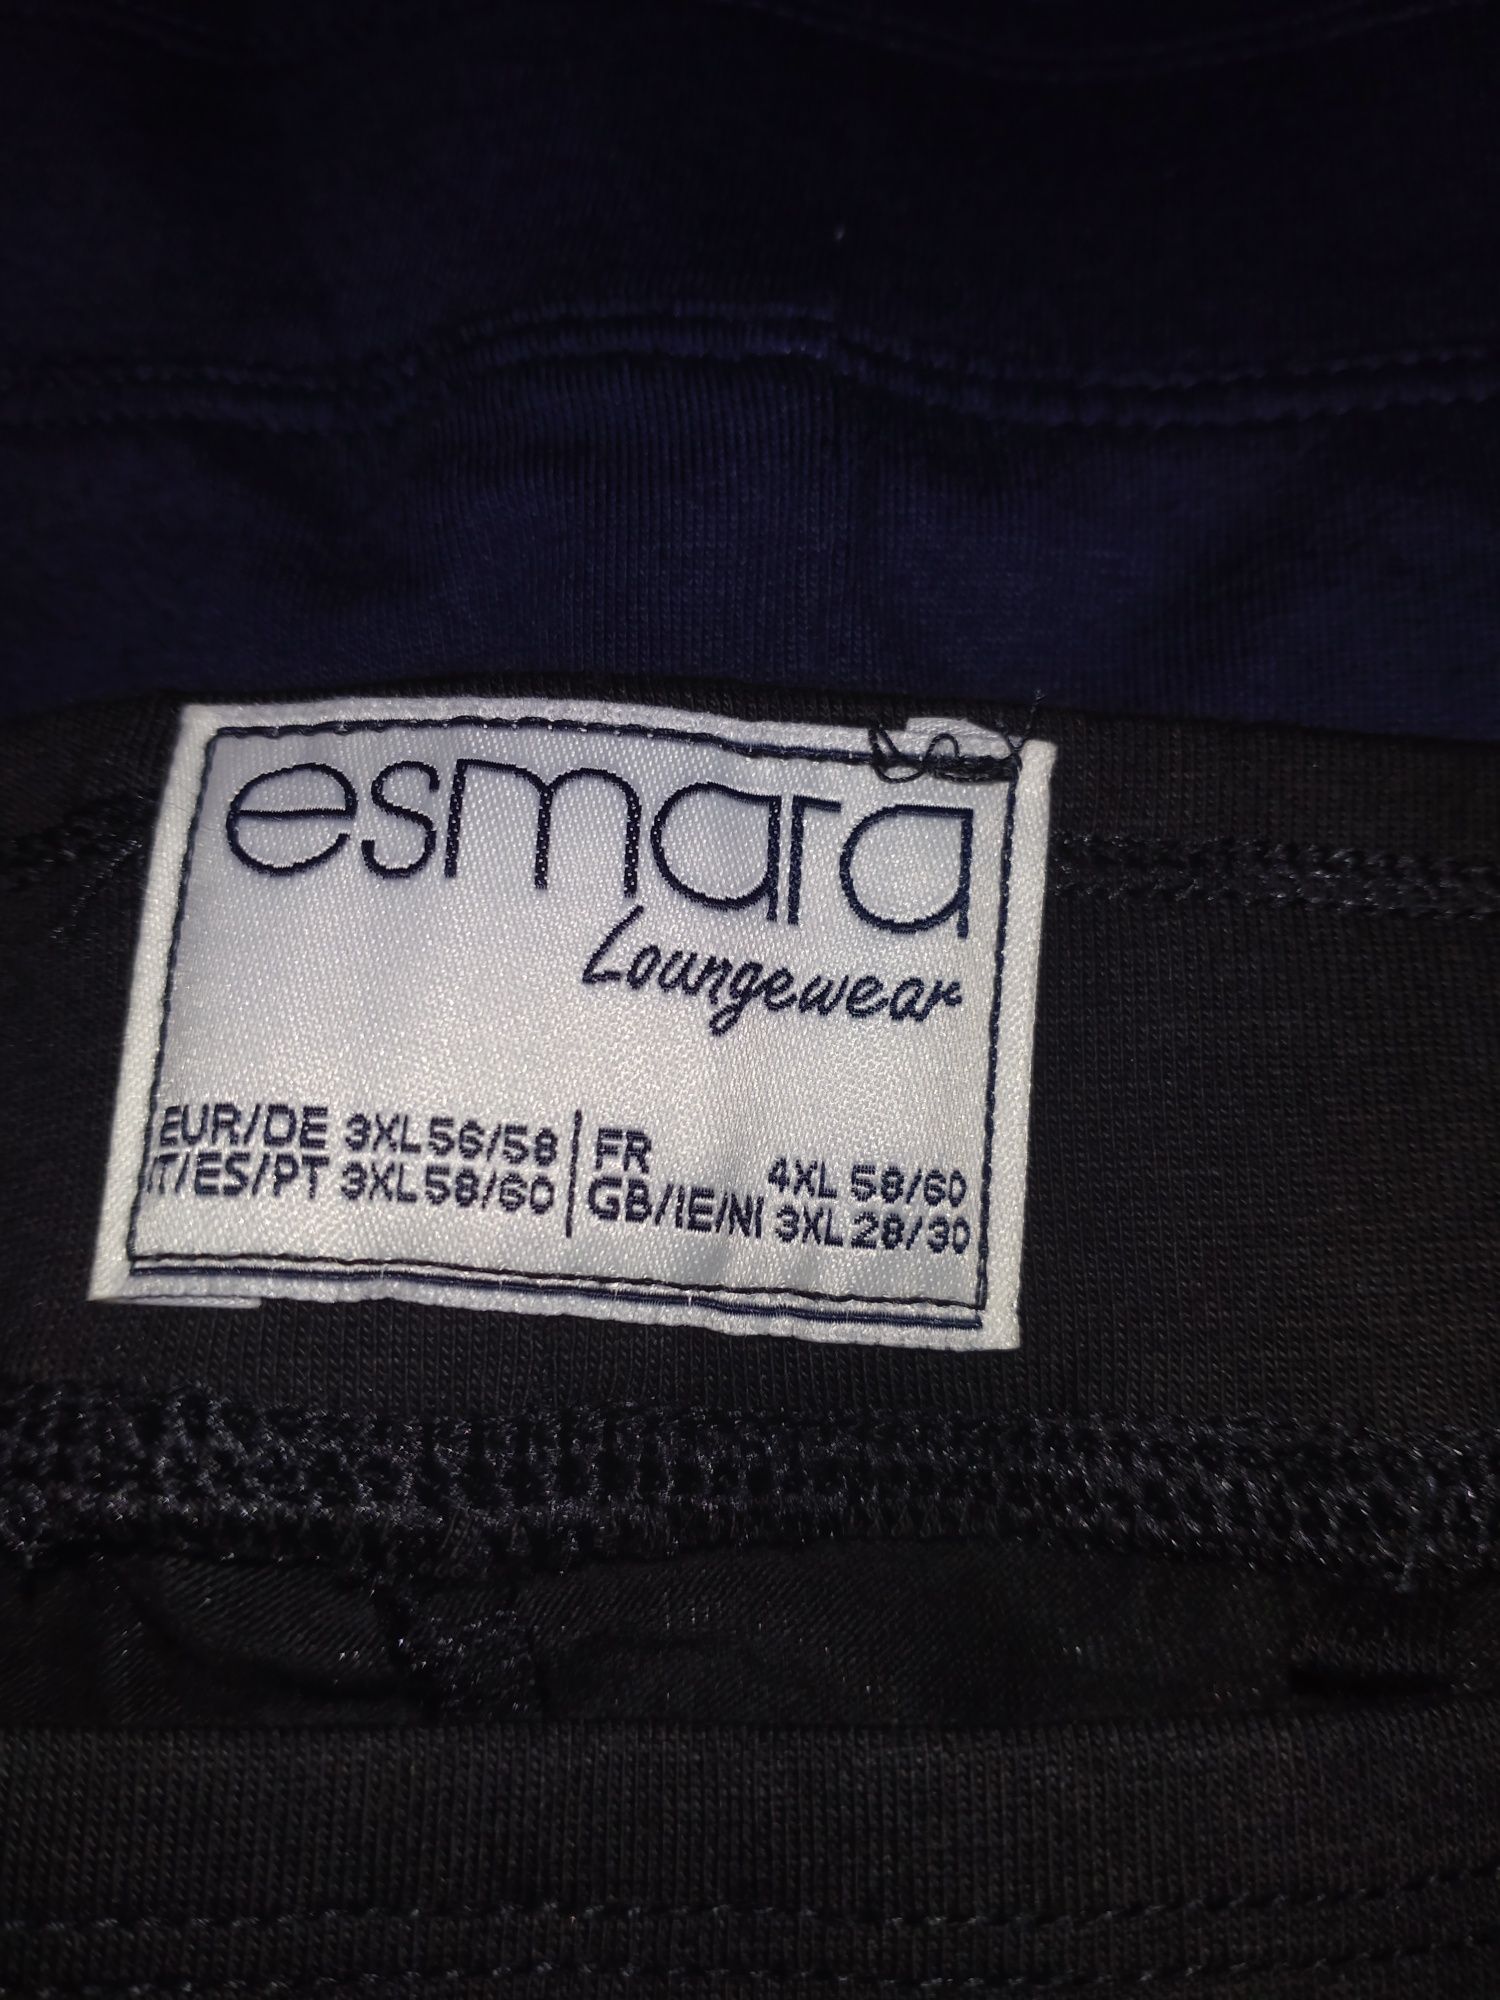 Spodnie wygodne Esmara 2 pary